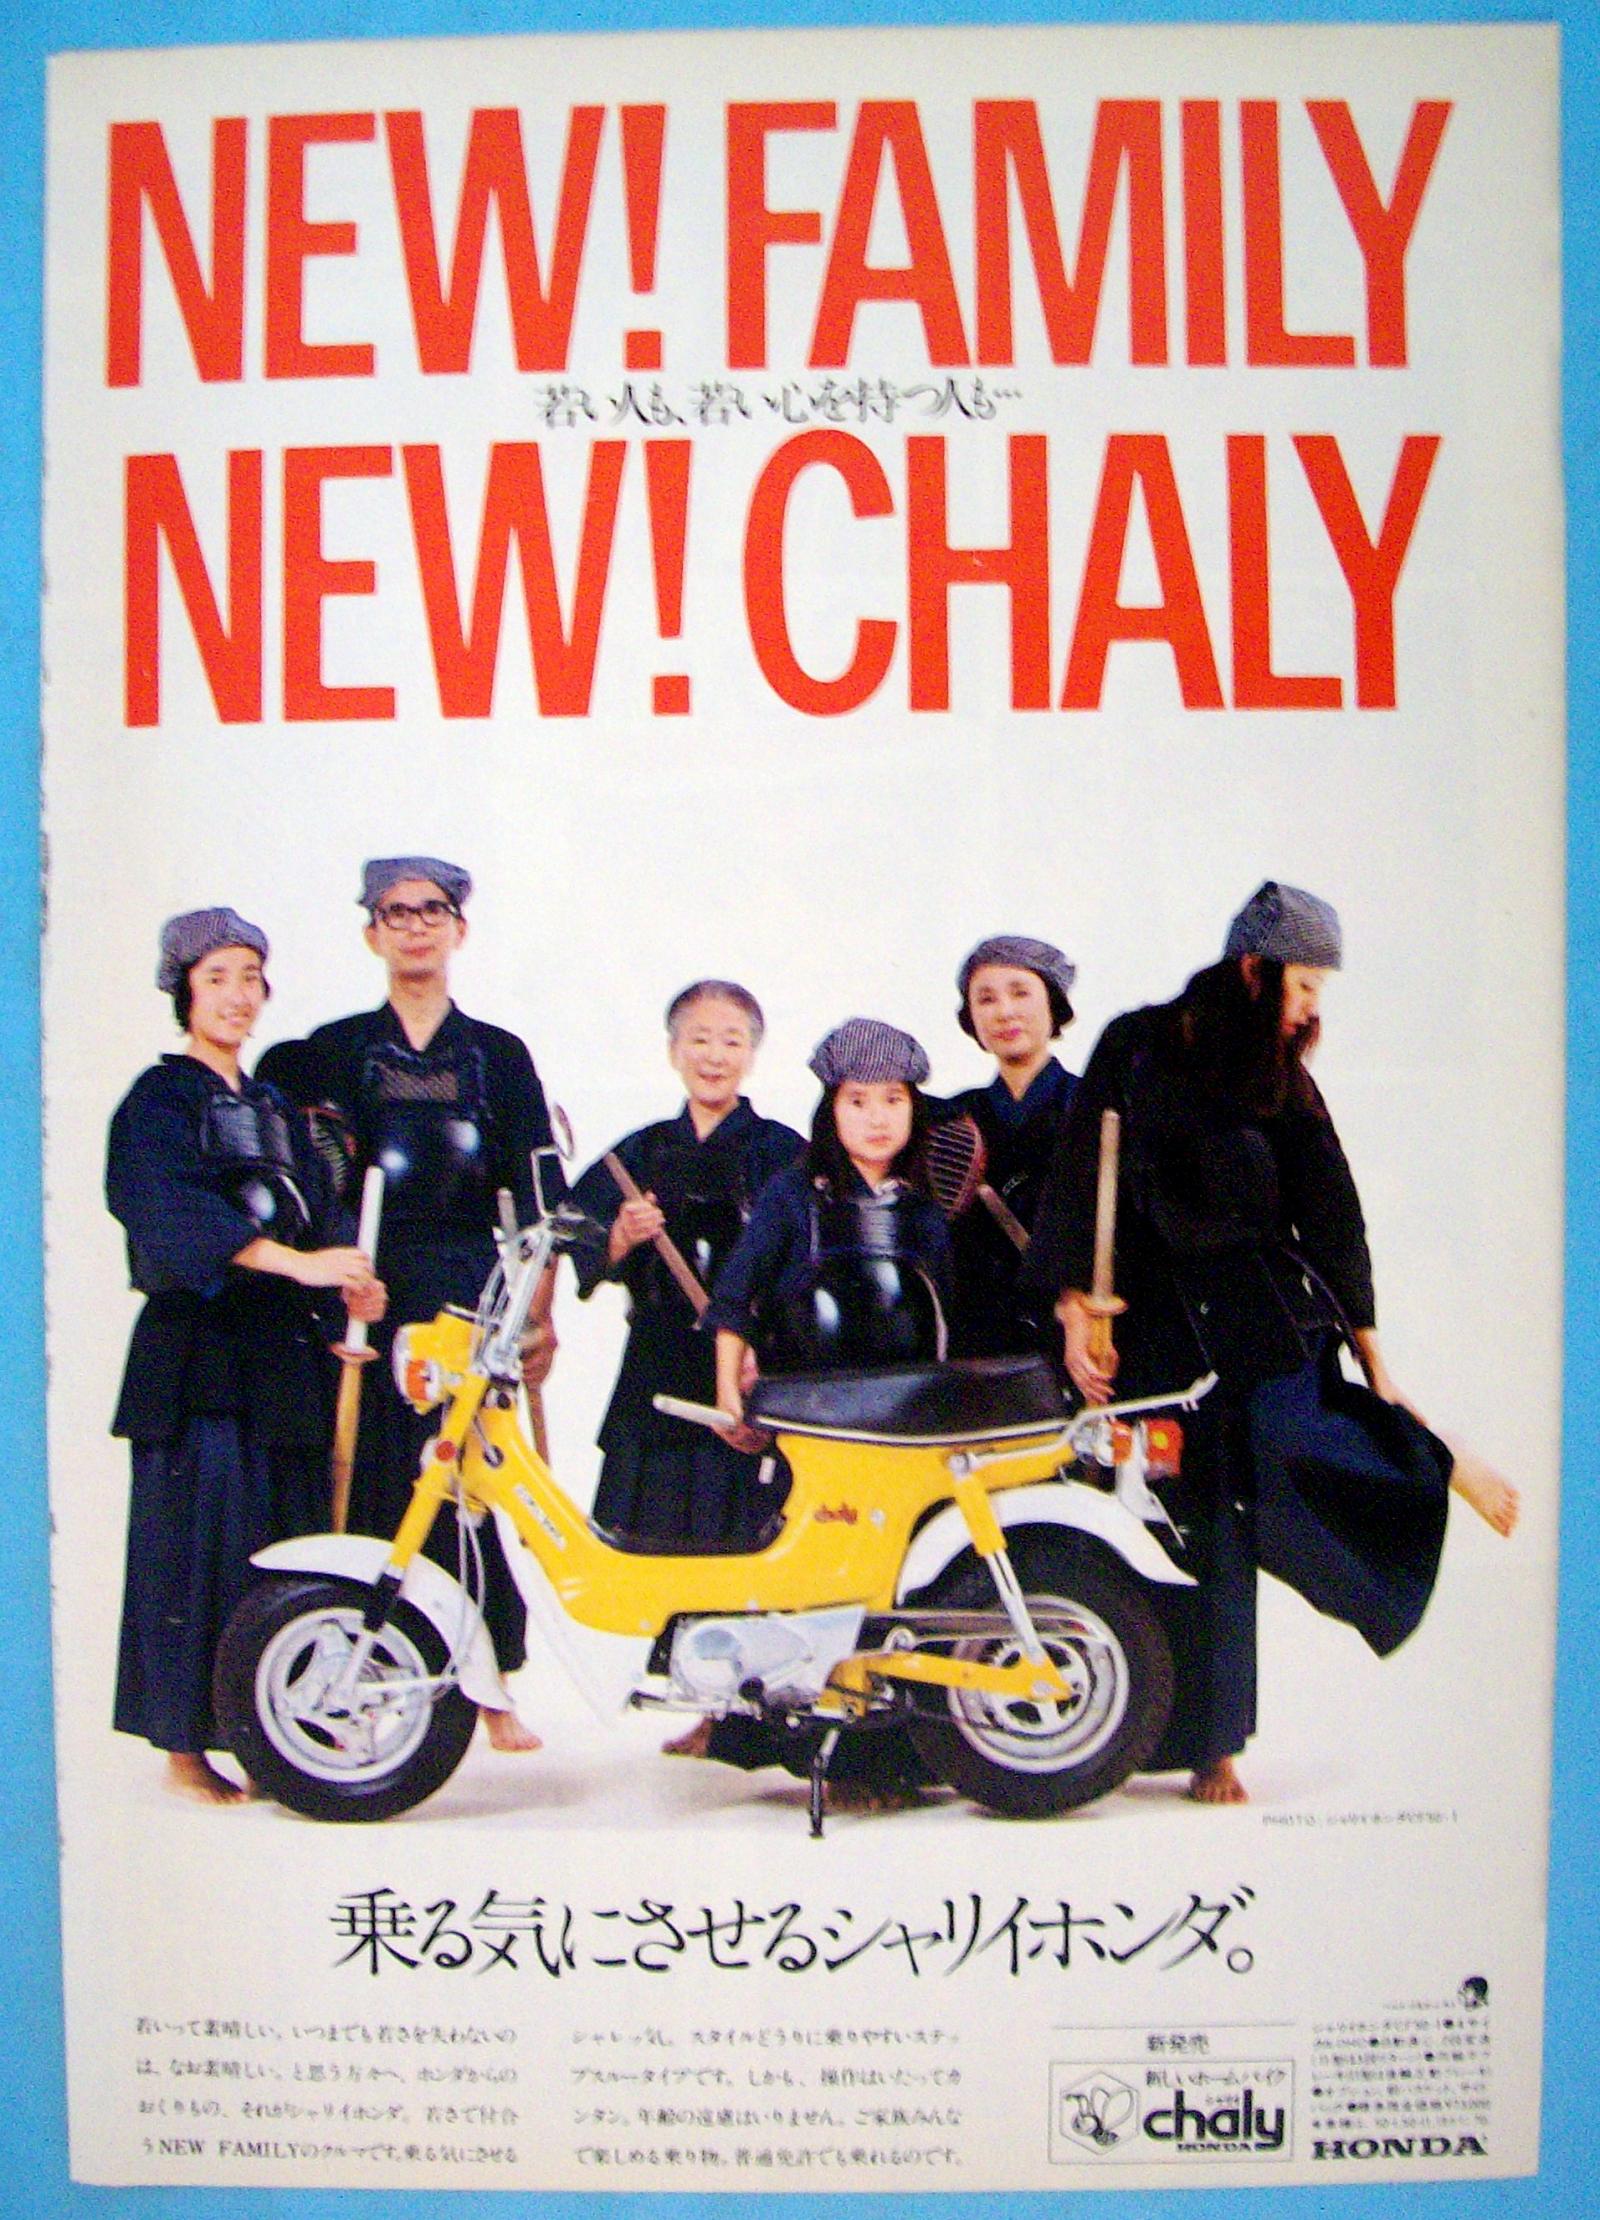 Honda Chaly